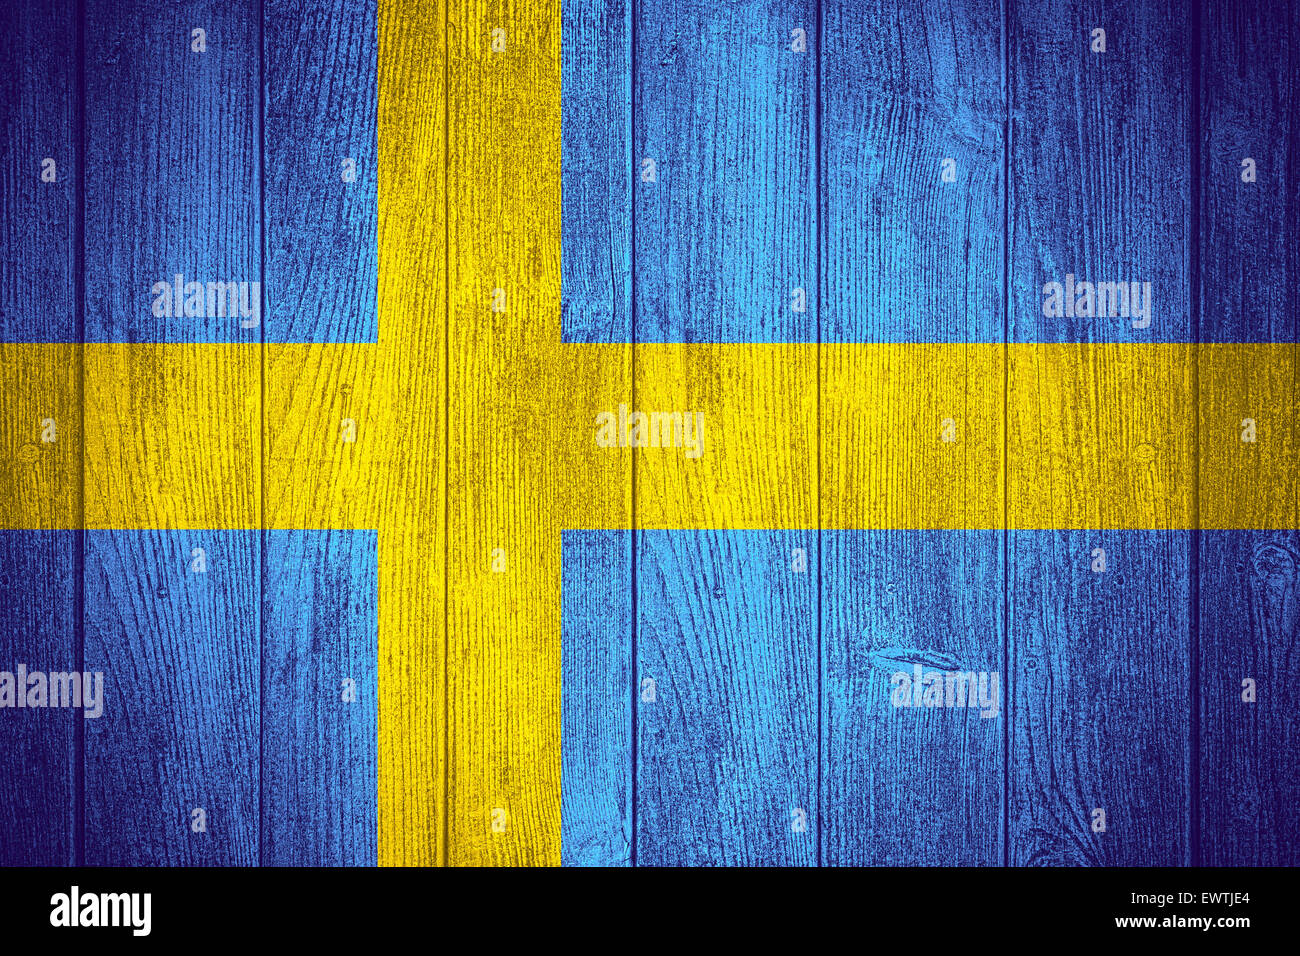 Sweden flag or Swedish banner on wooden boards background Stock Photo